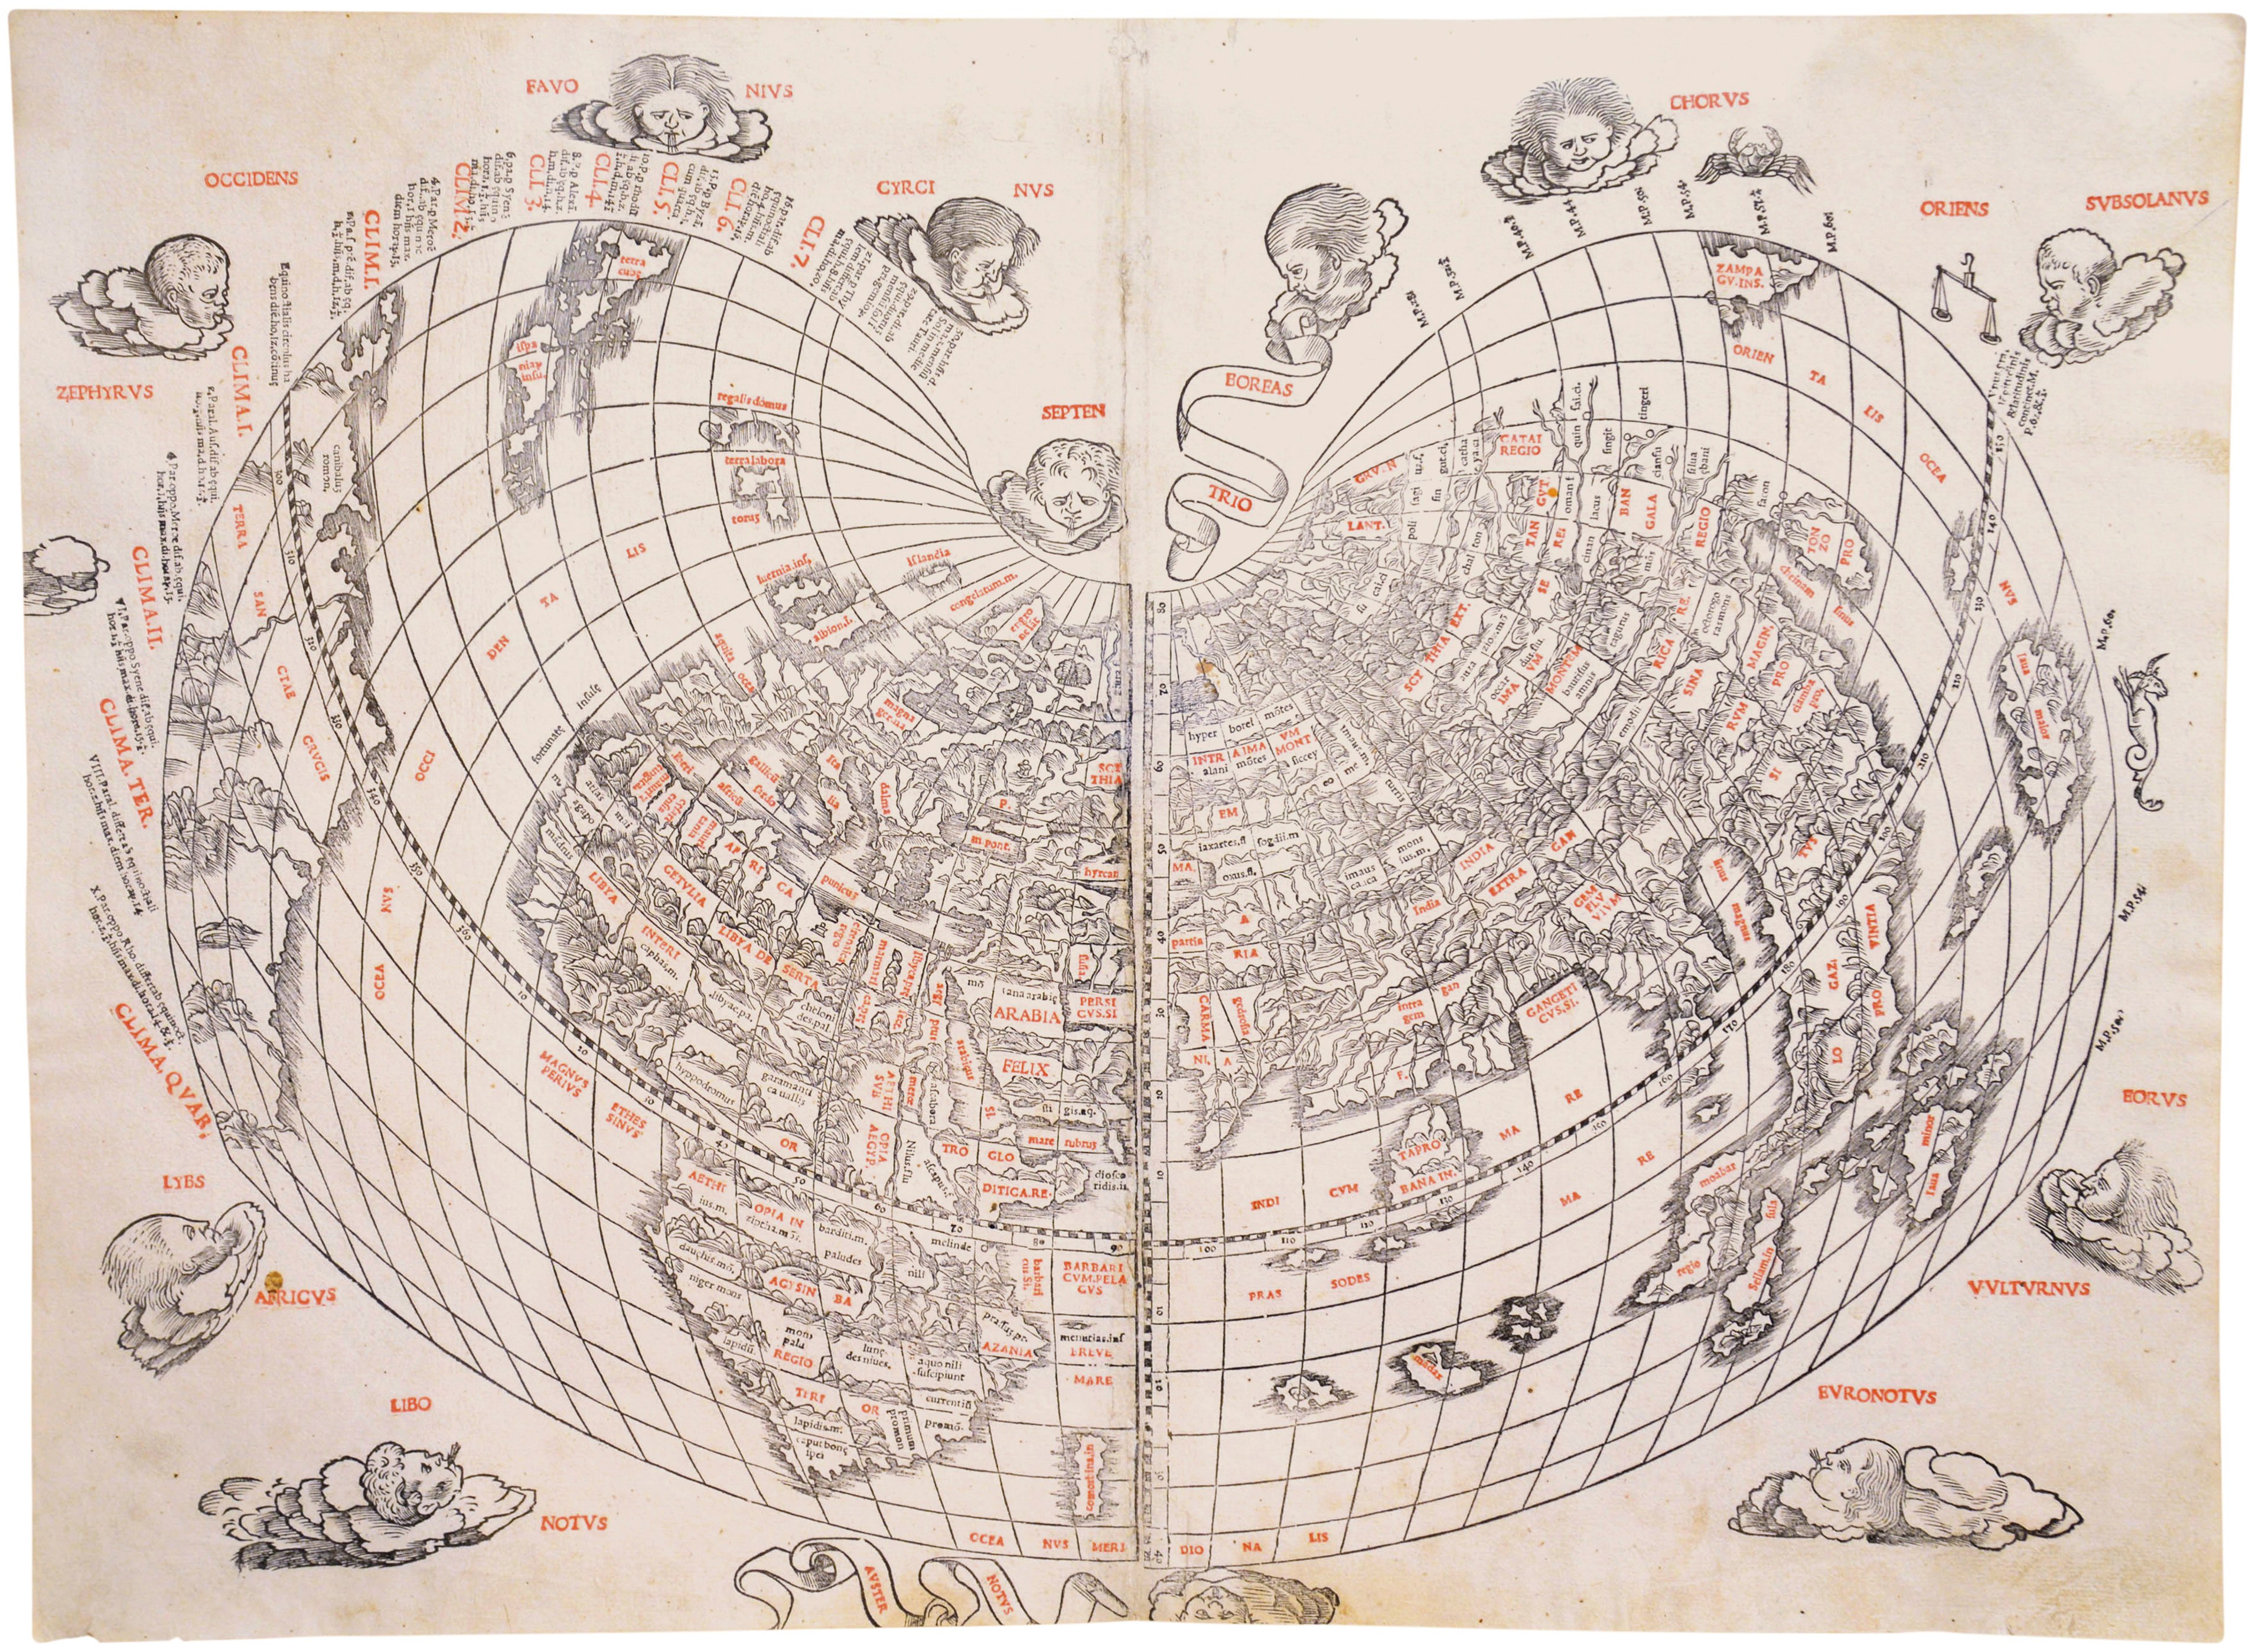 Bernadus Sylvanus, Untitled world map, 1511